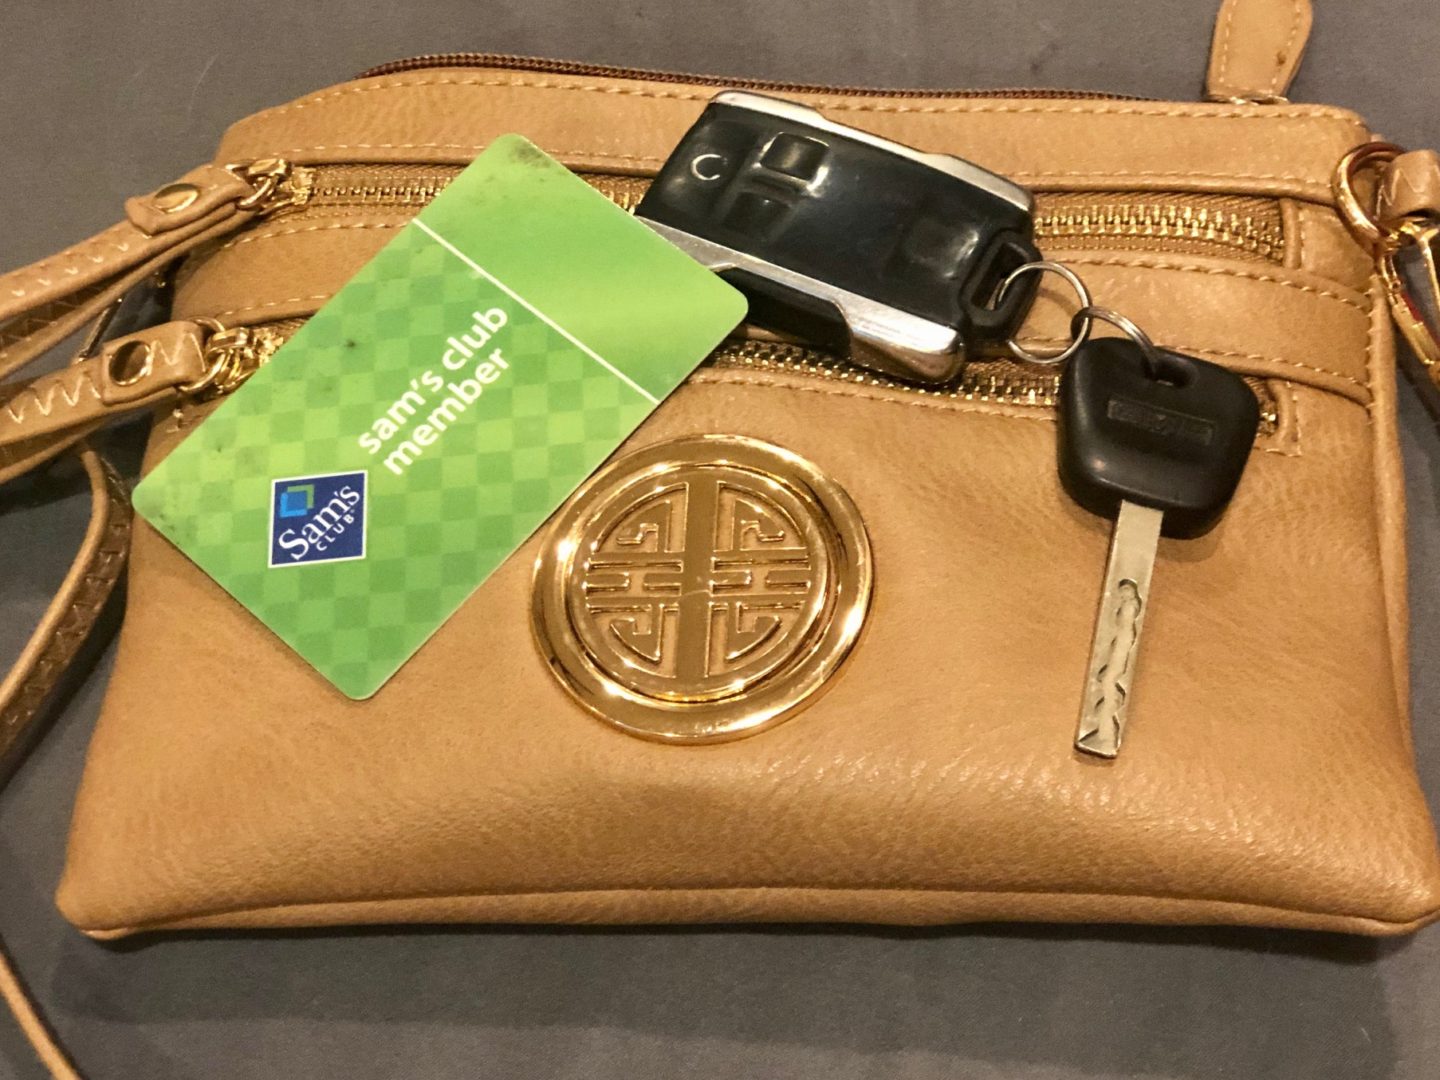 purse, keys and card